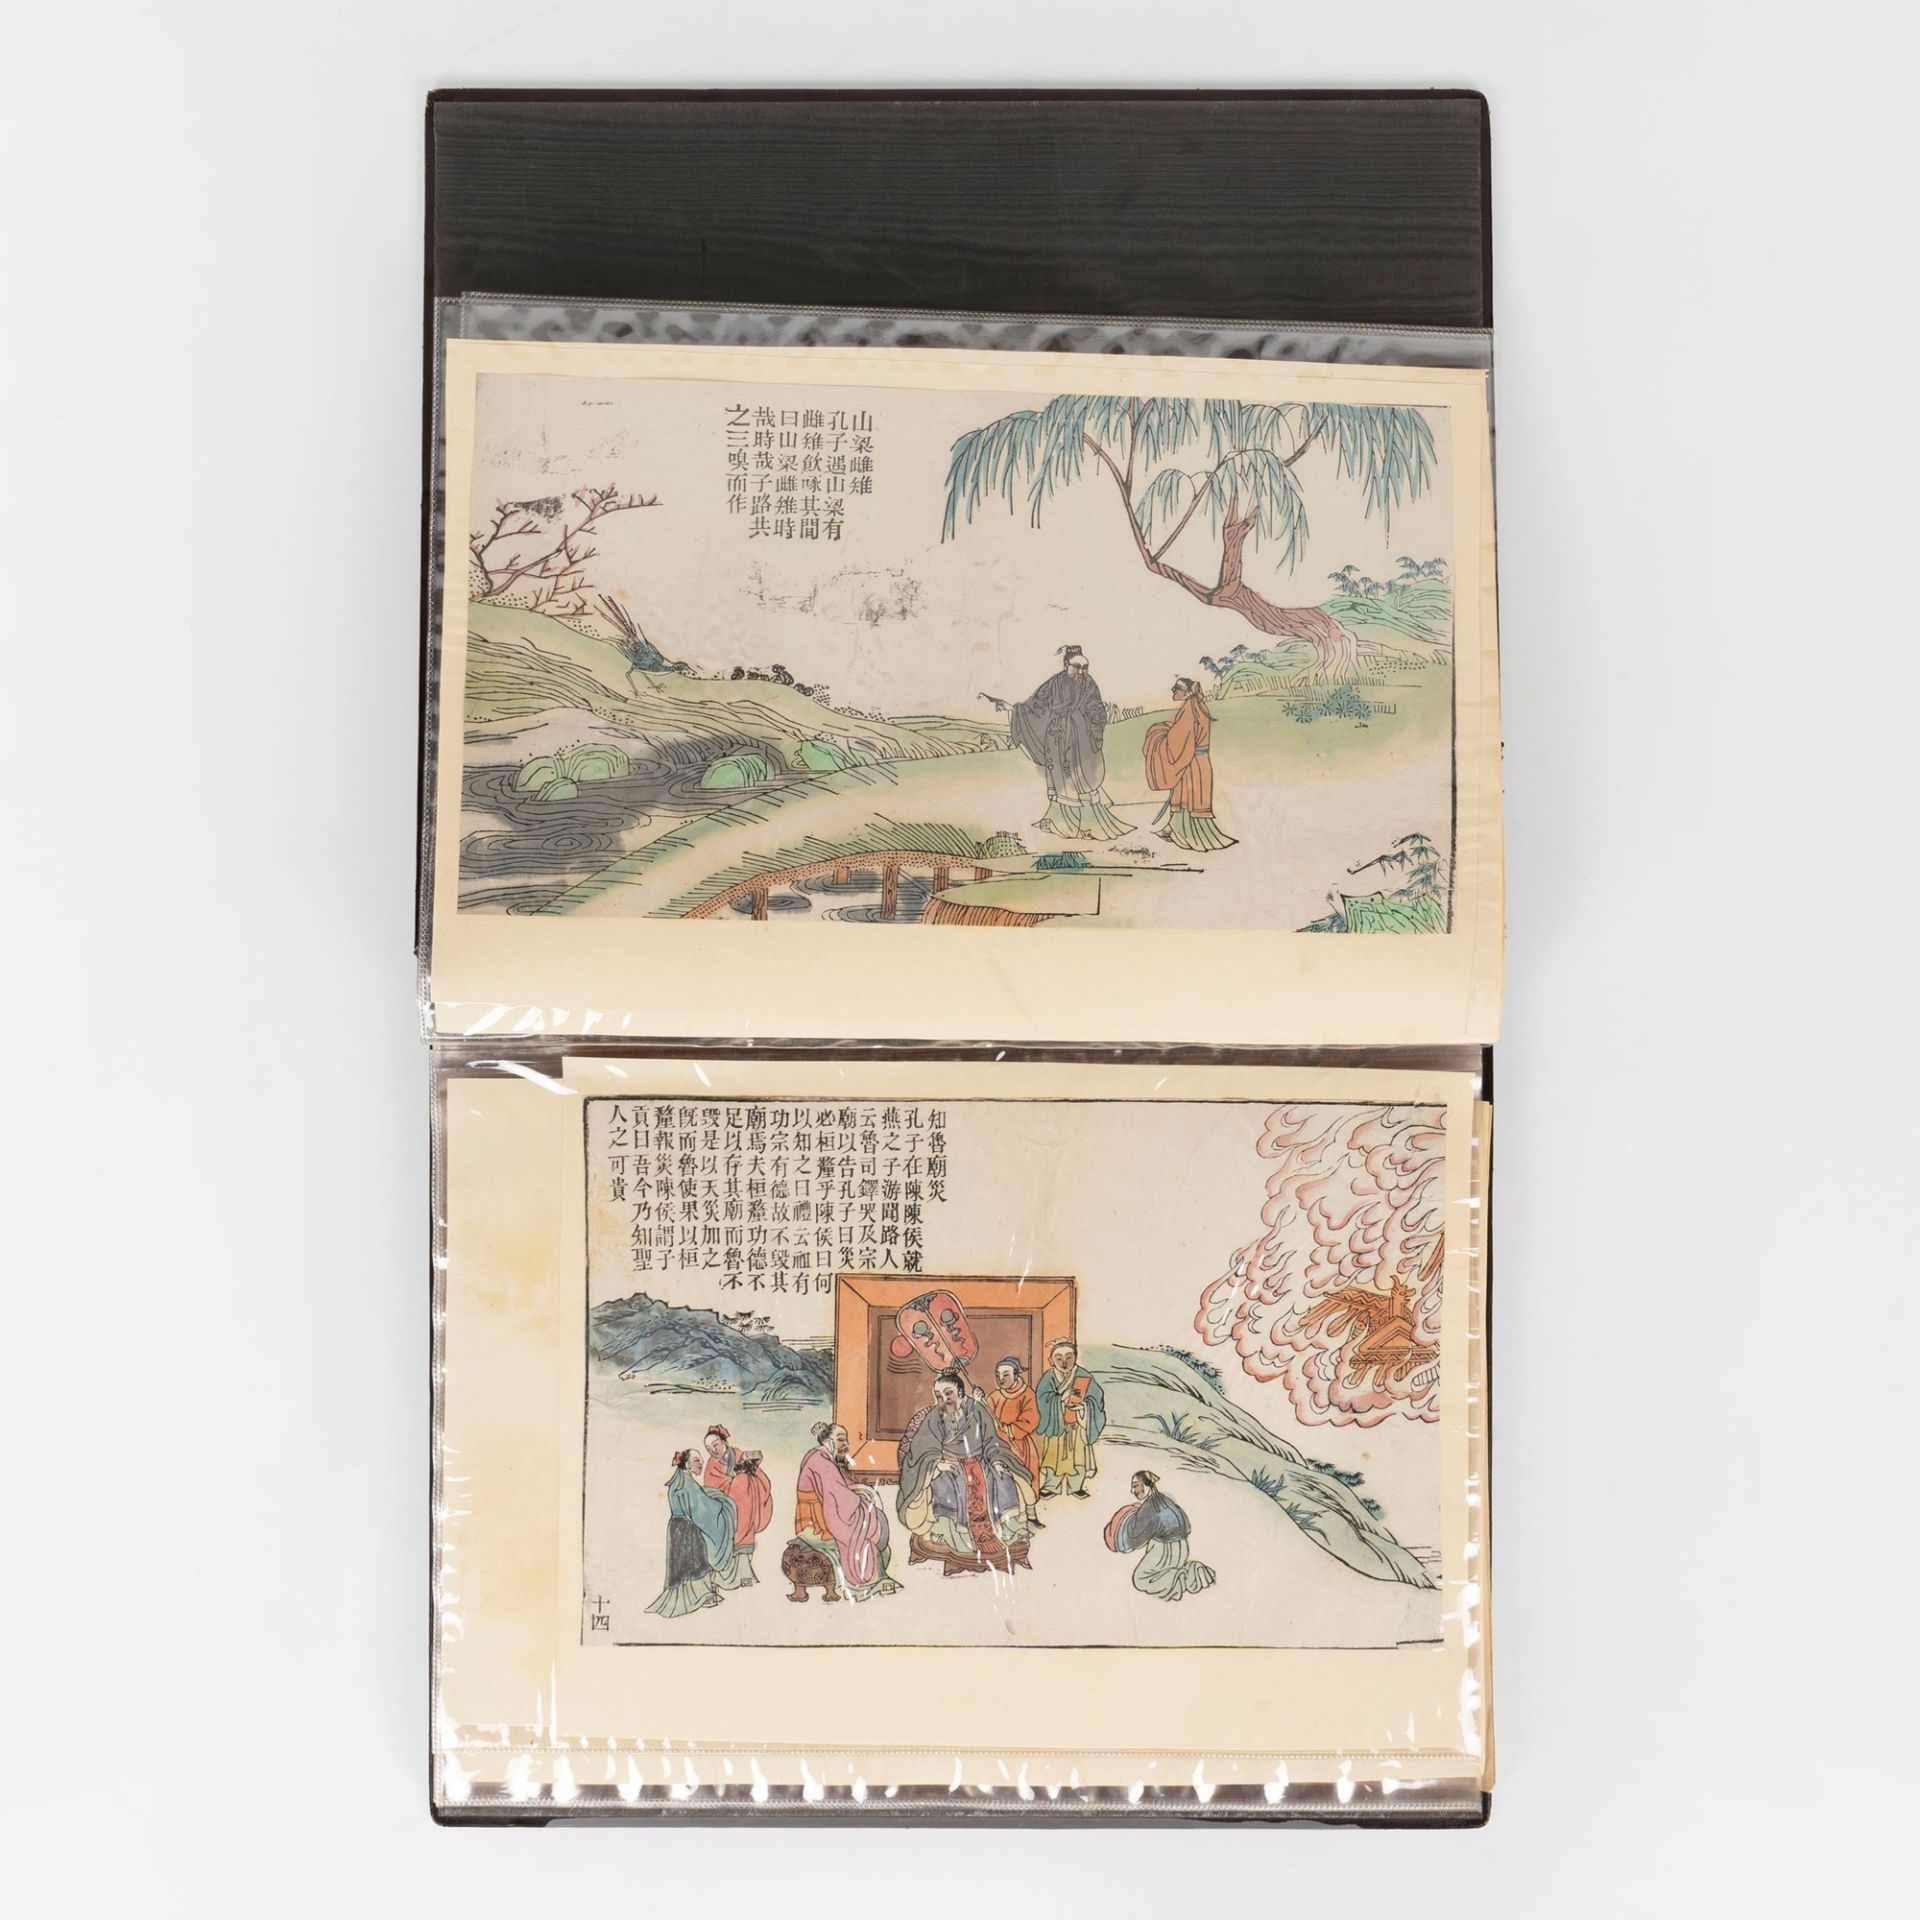 Album containing 27 woodcuts depicting the Life of Confucius, China, 20th century